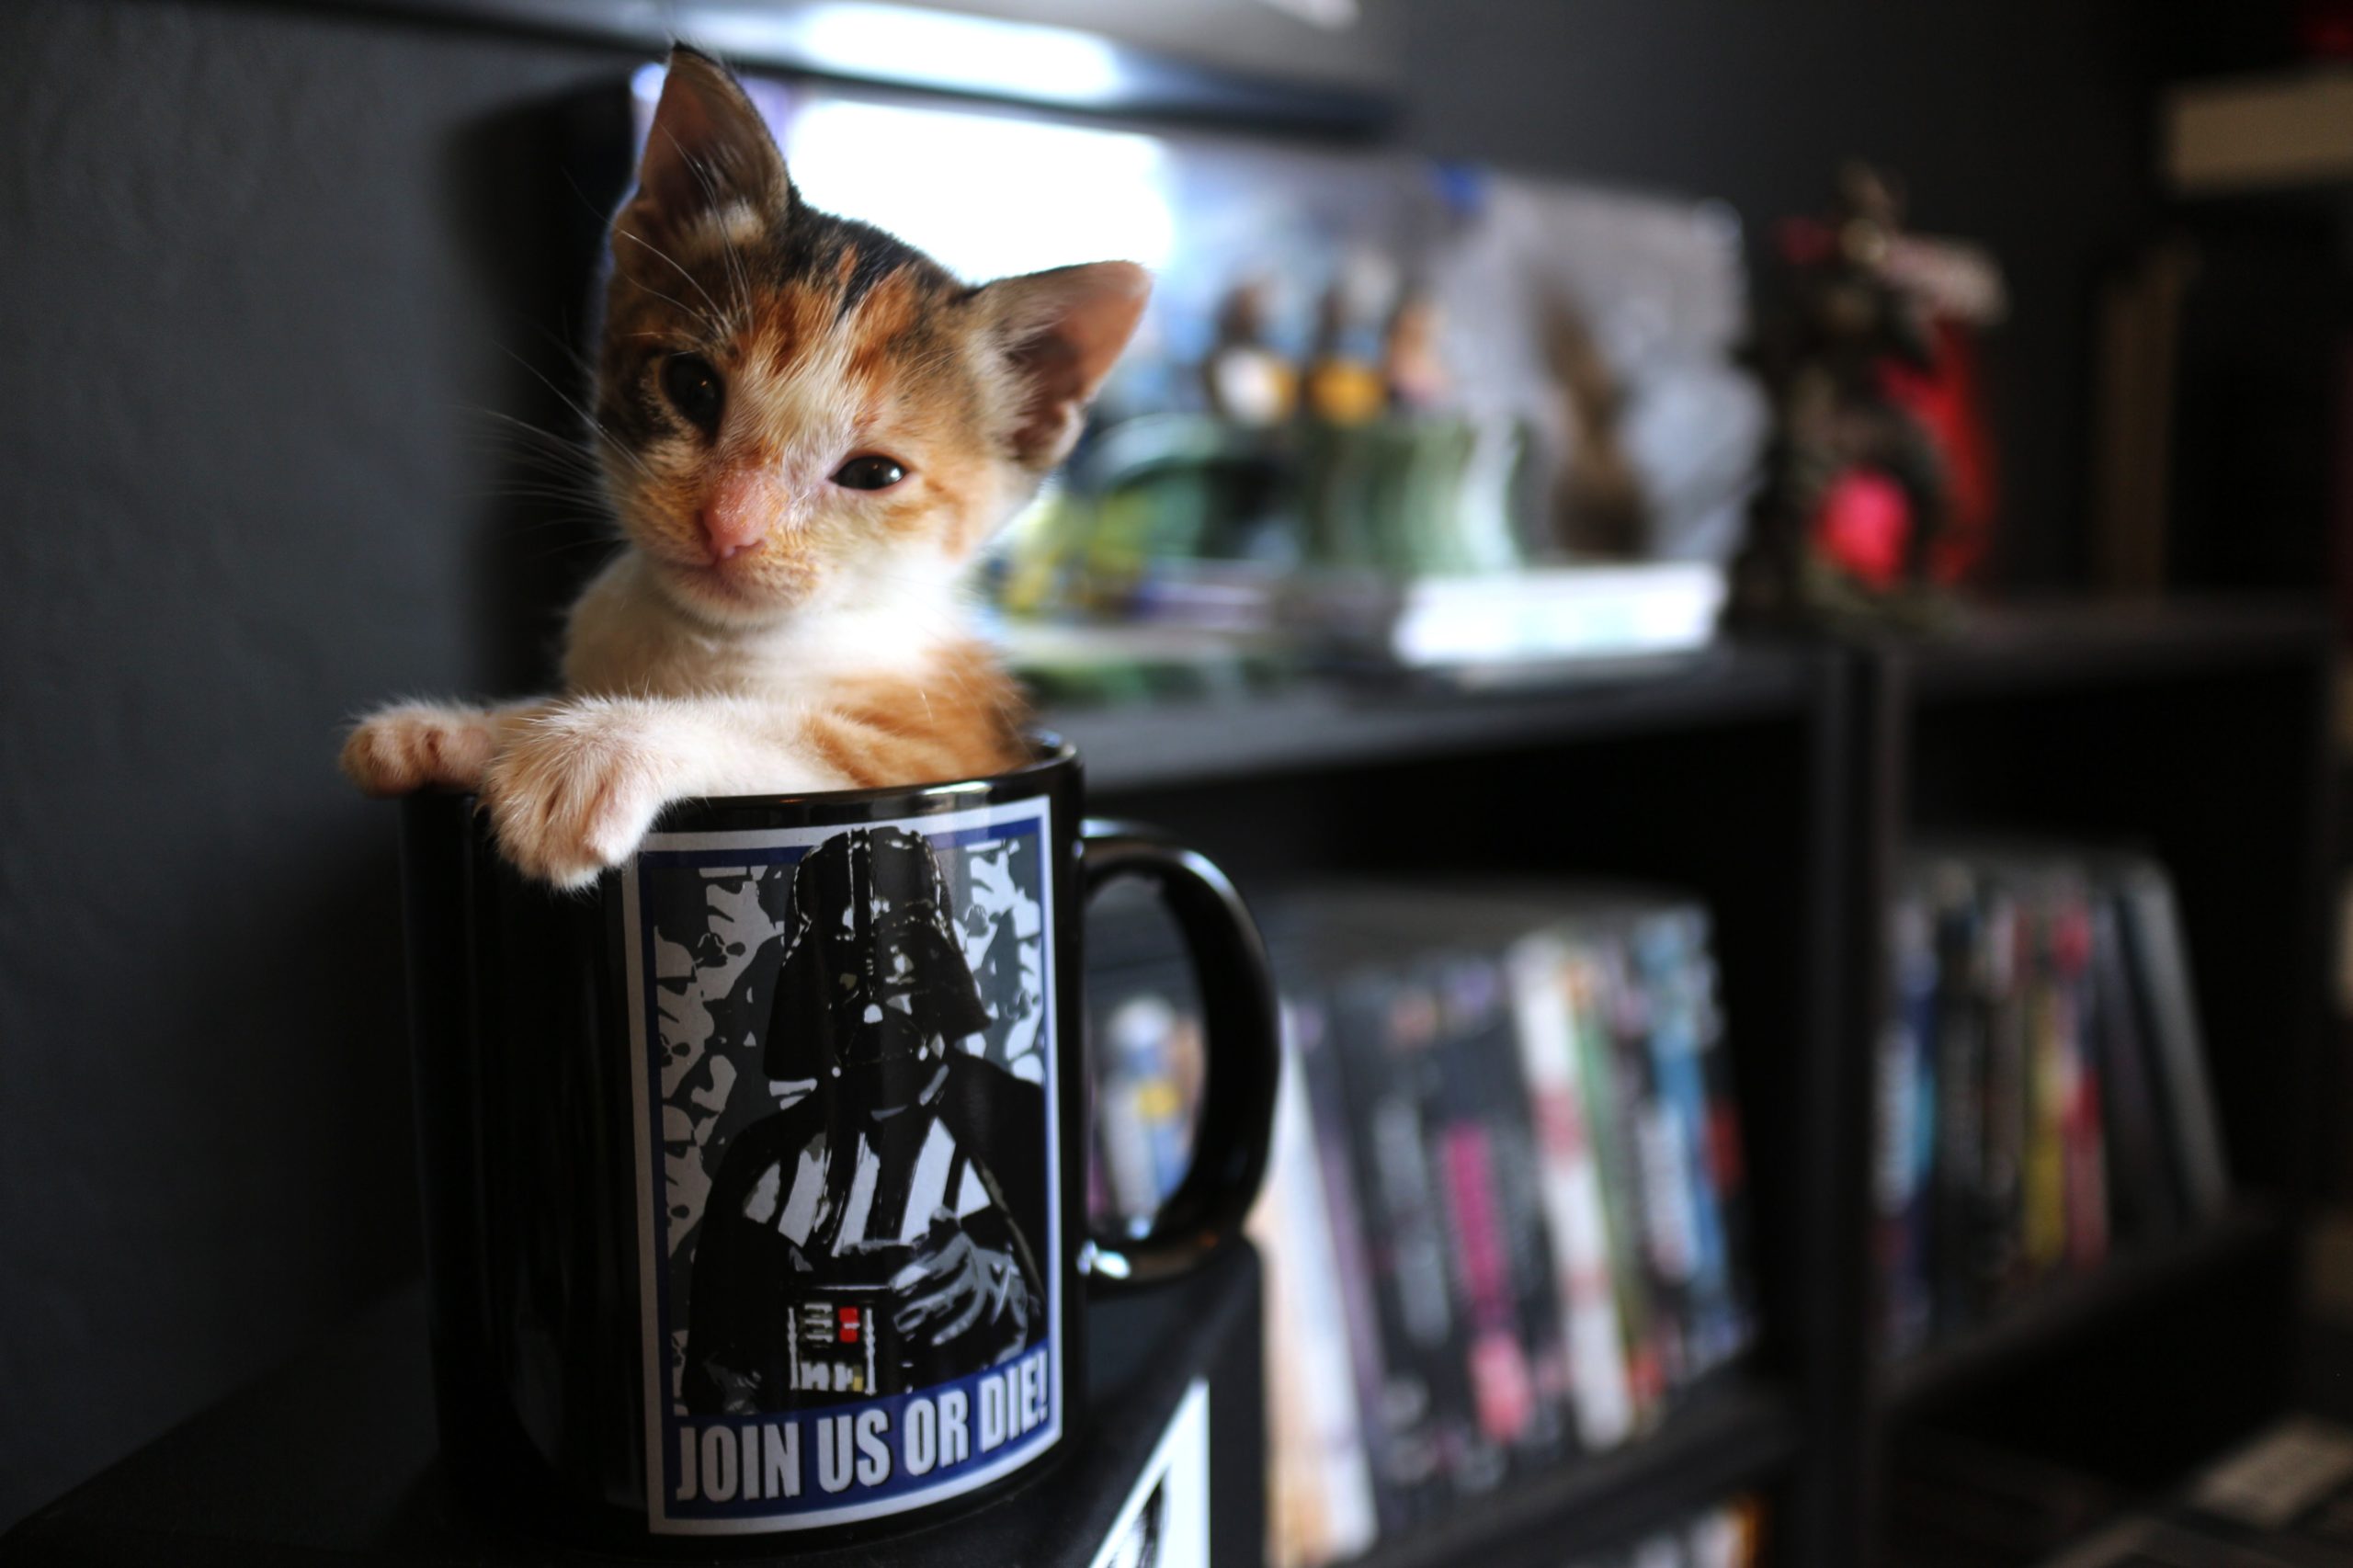 Kitty in Darth Vader mug Photo by Daniel Tuttle on Unsplash